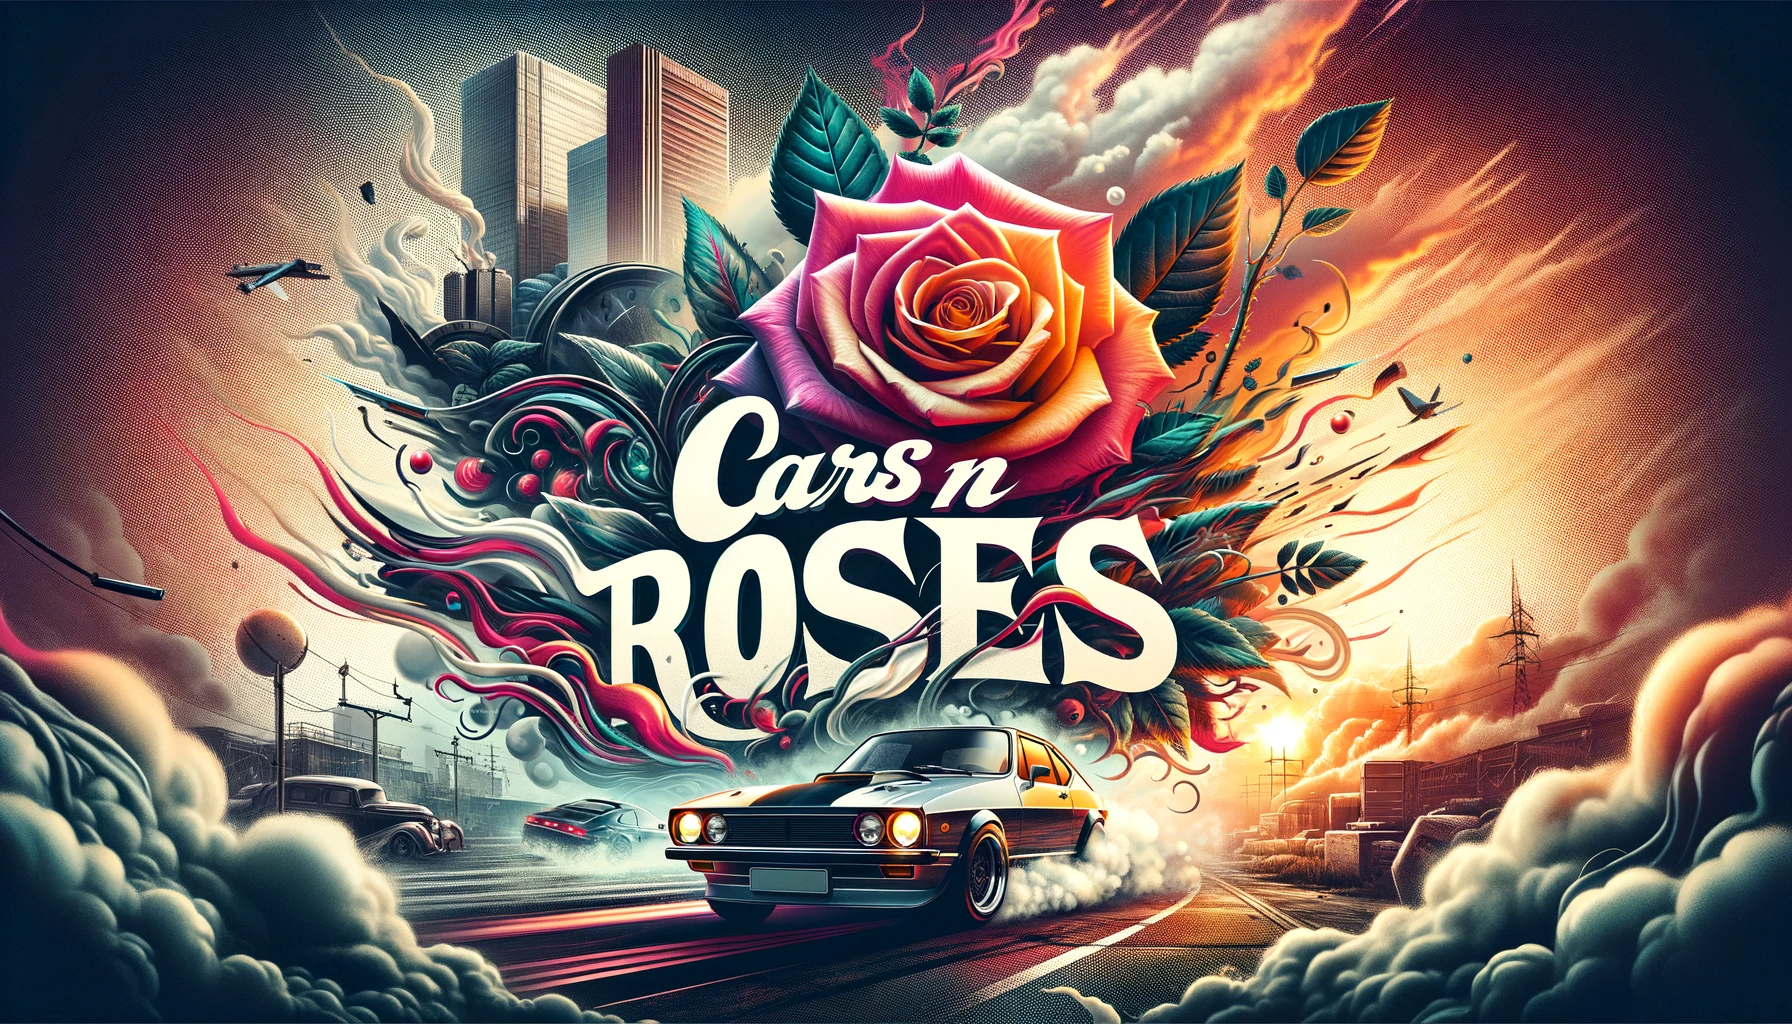 Cars n roses